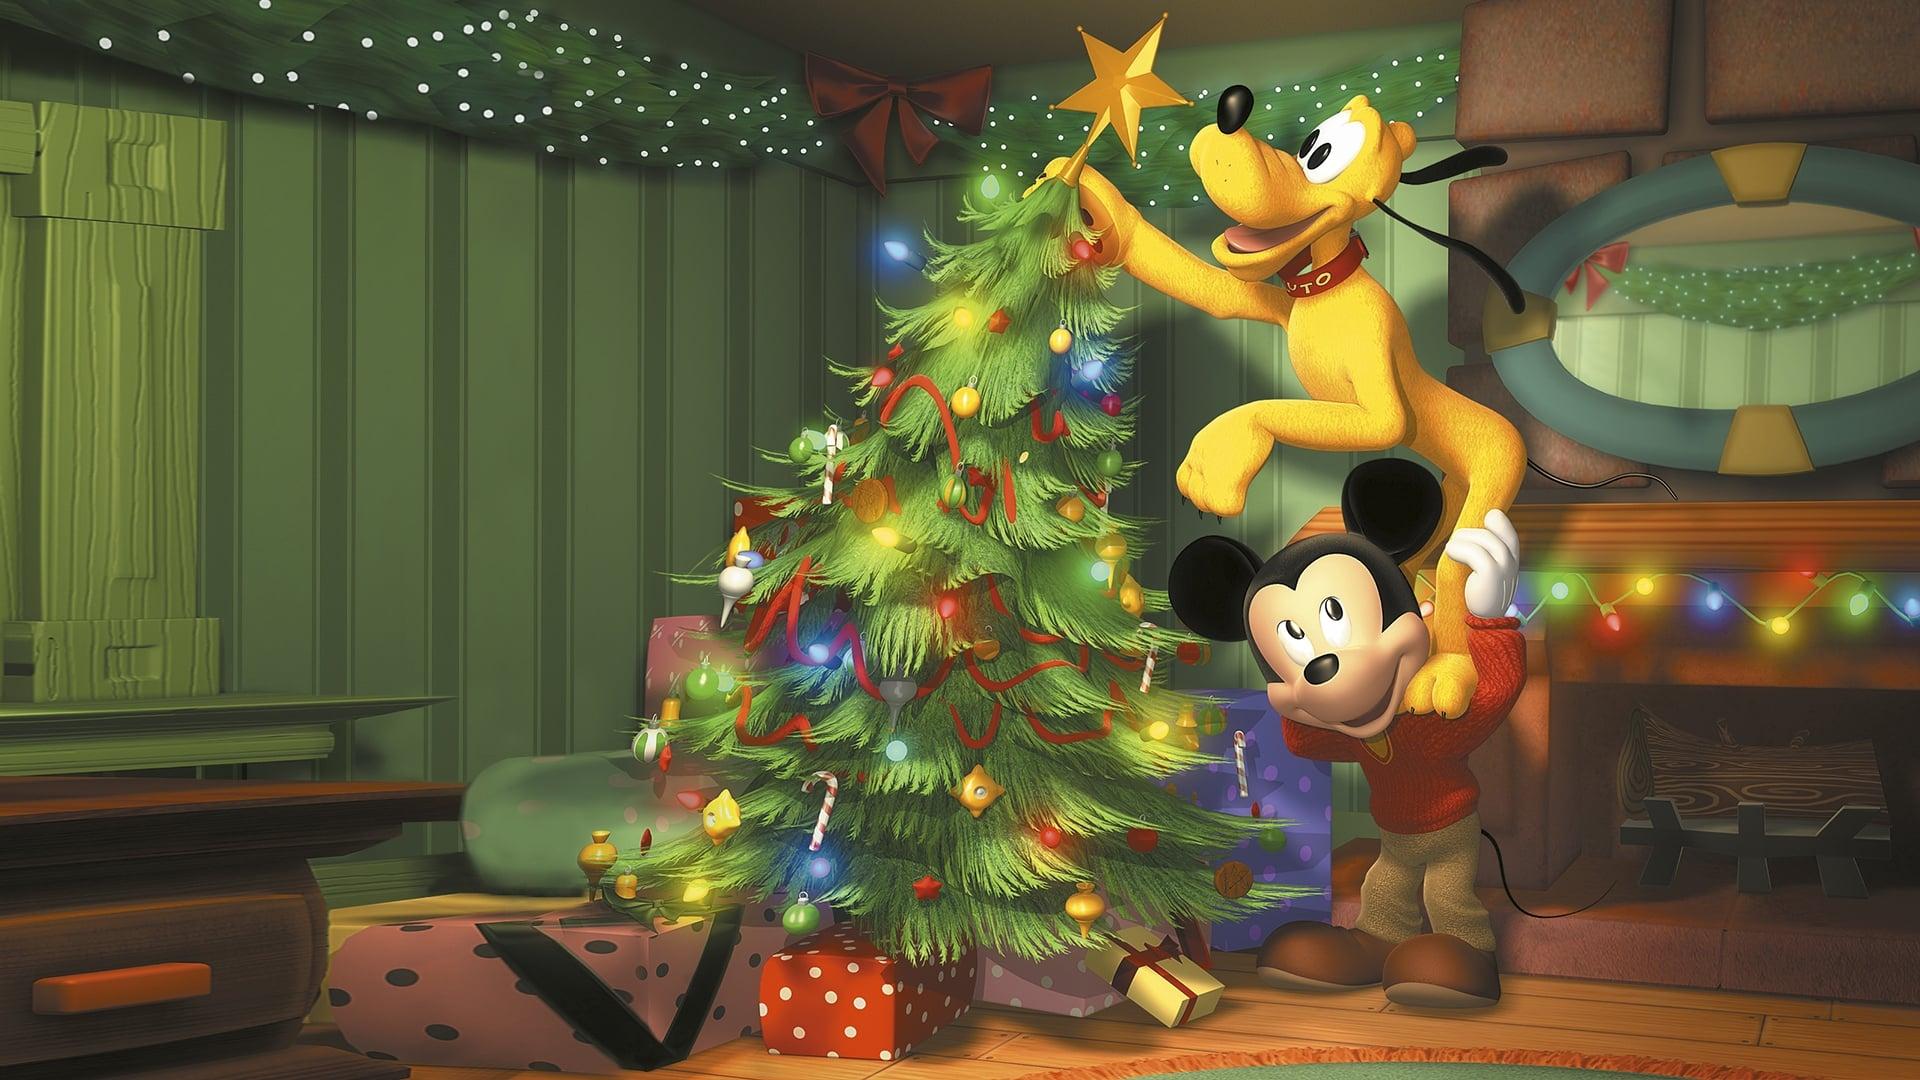 Mickey's Twice Upon a Christmas backdrop